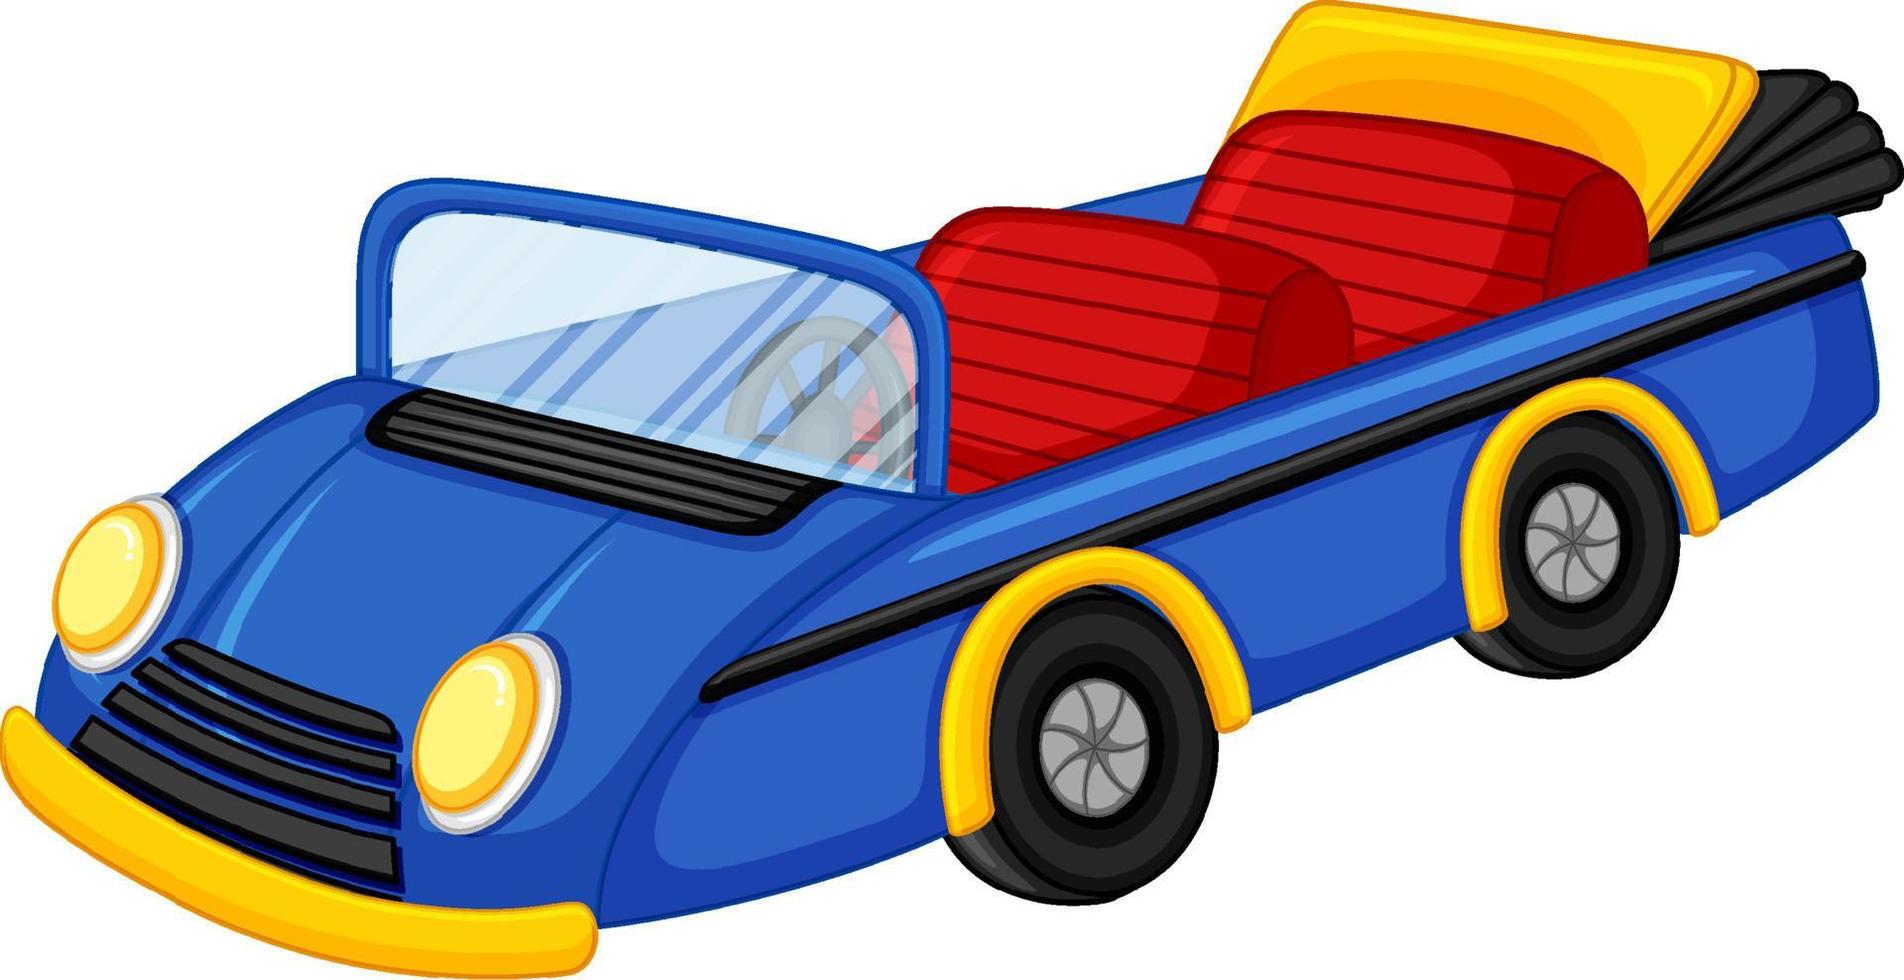 Blue vintage convertible car in cartoon style vector